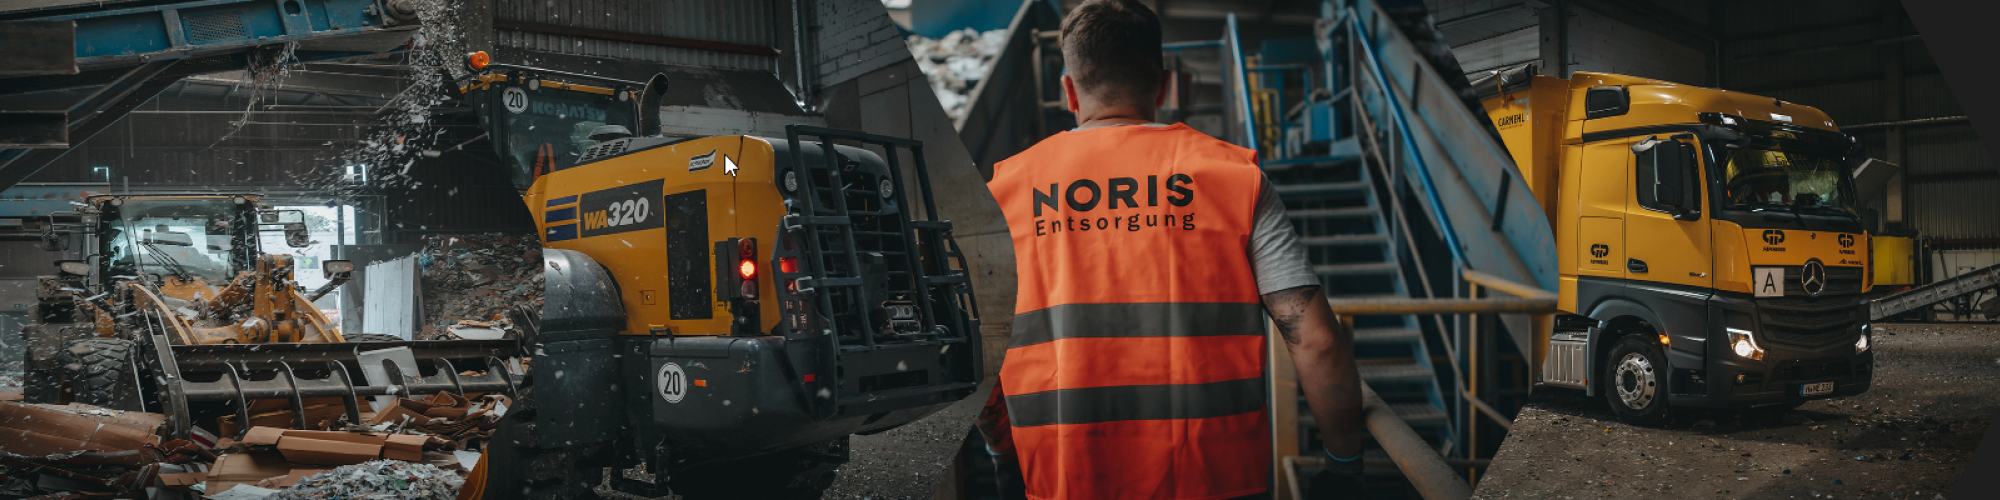 Noris Entsorgung GmbH